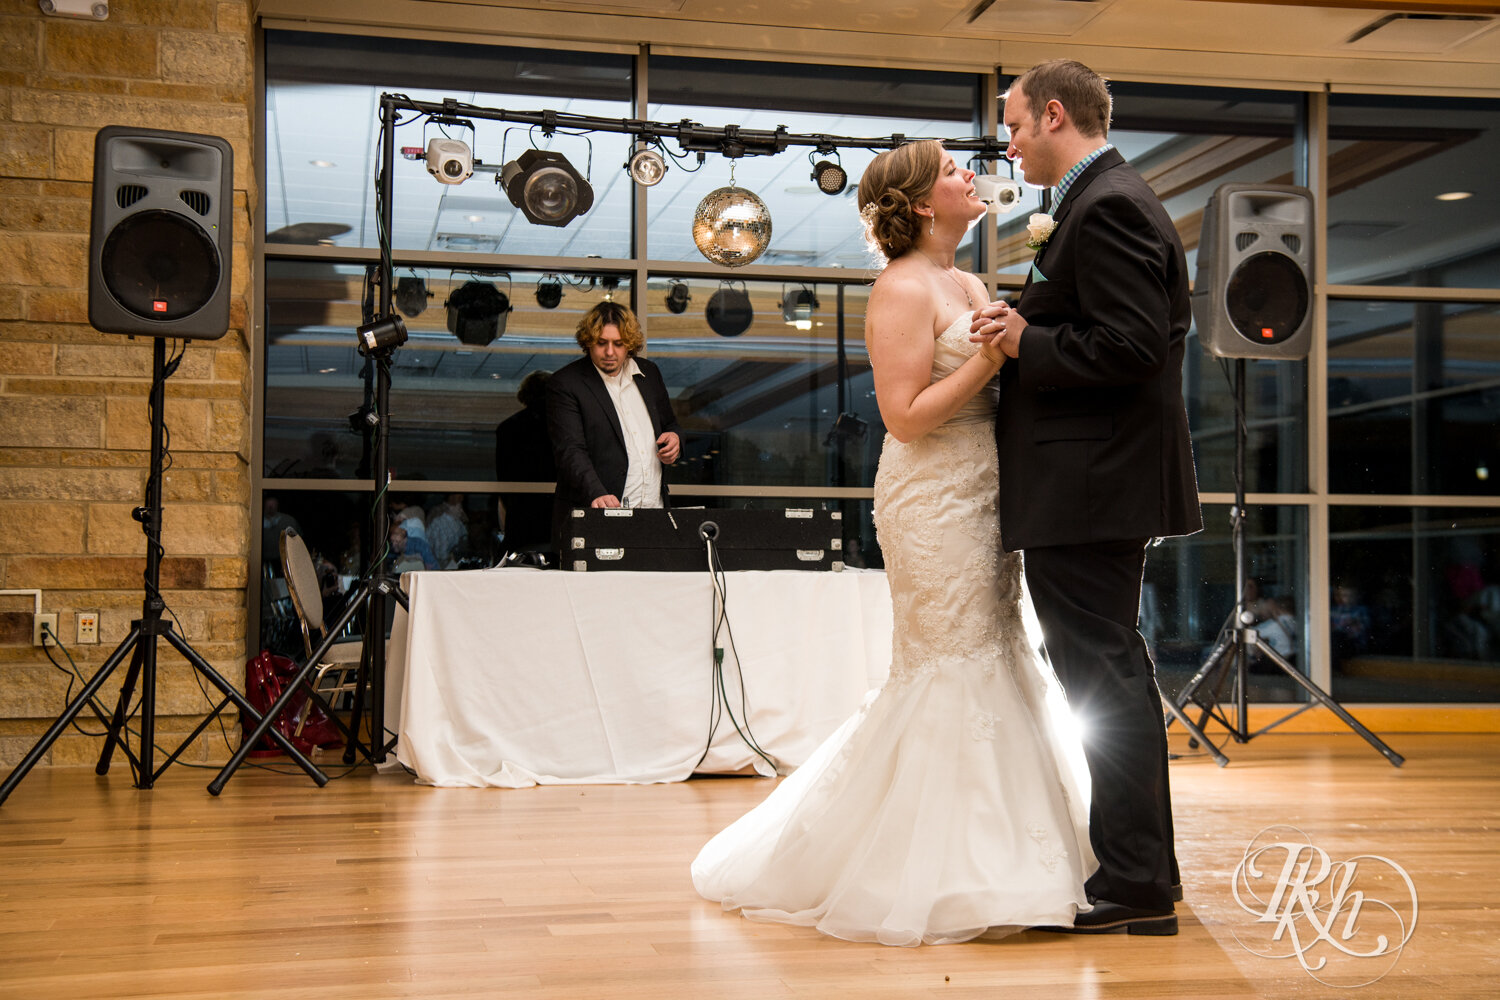 Bride and groom dance at wedding reception at Eagan Community Center in Eagan, Minnesota.